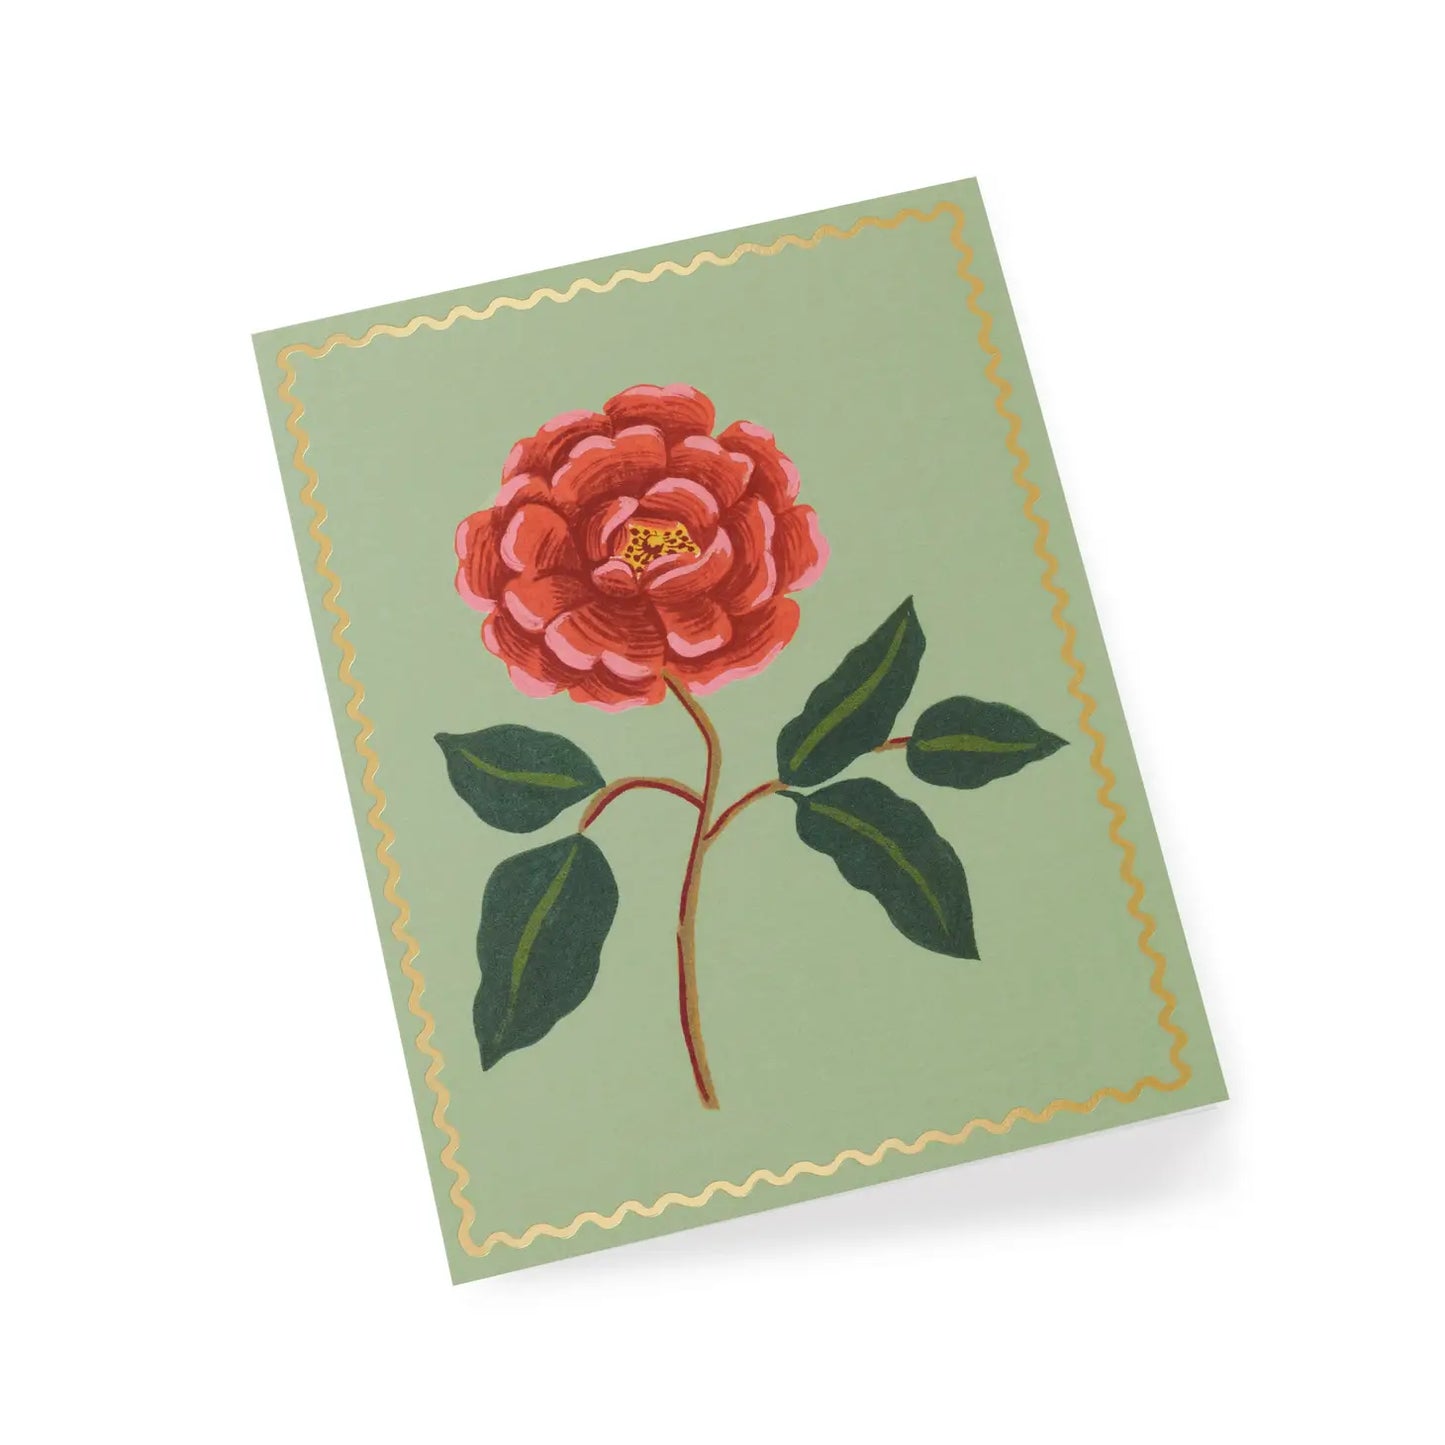 Scarlet Rose Card